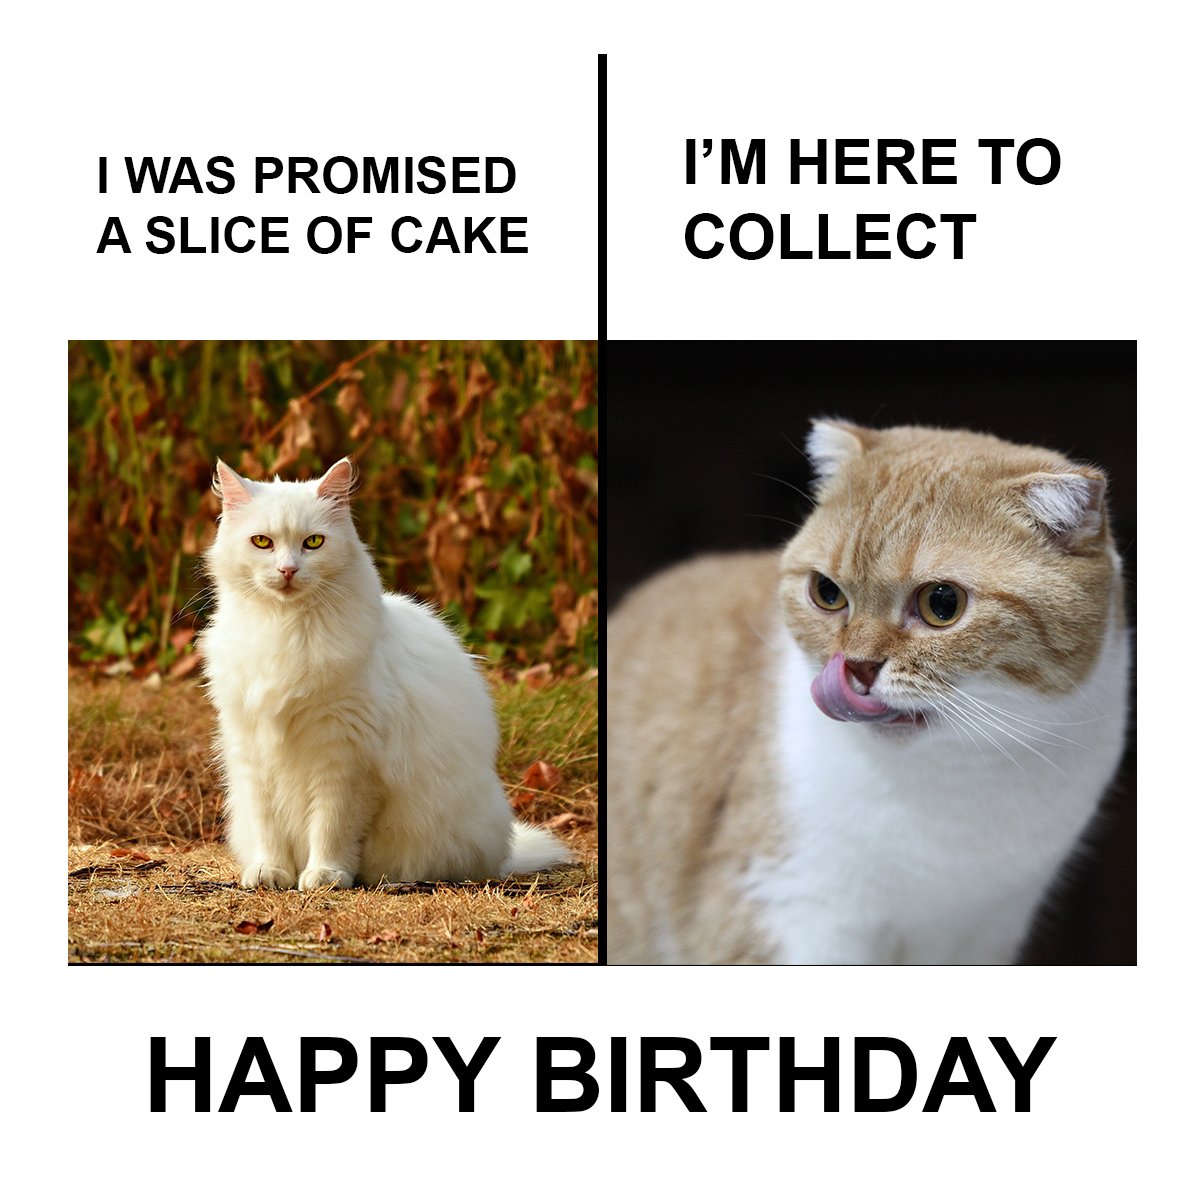 its my birthday meme cat